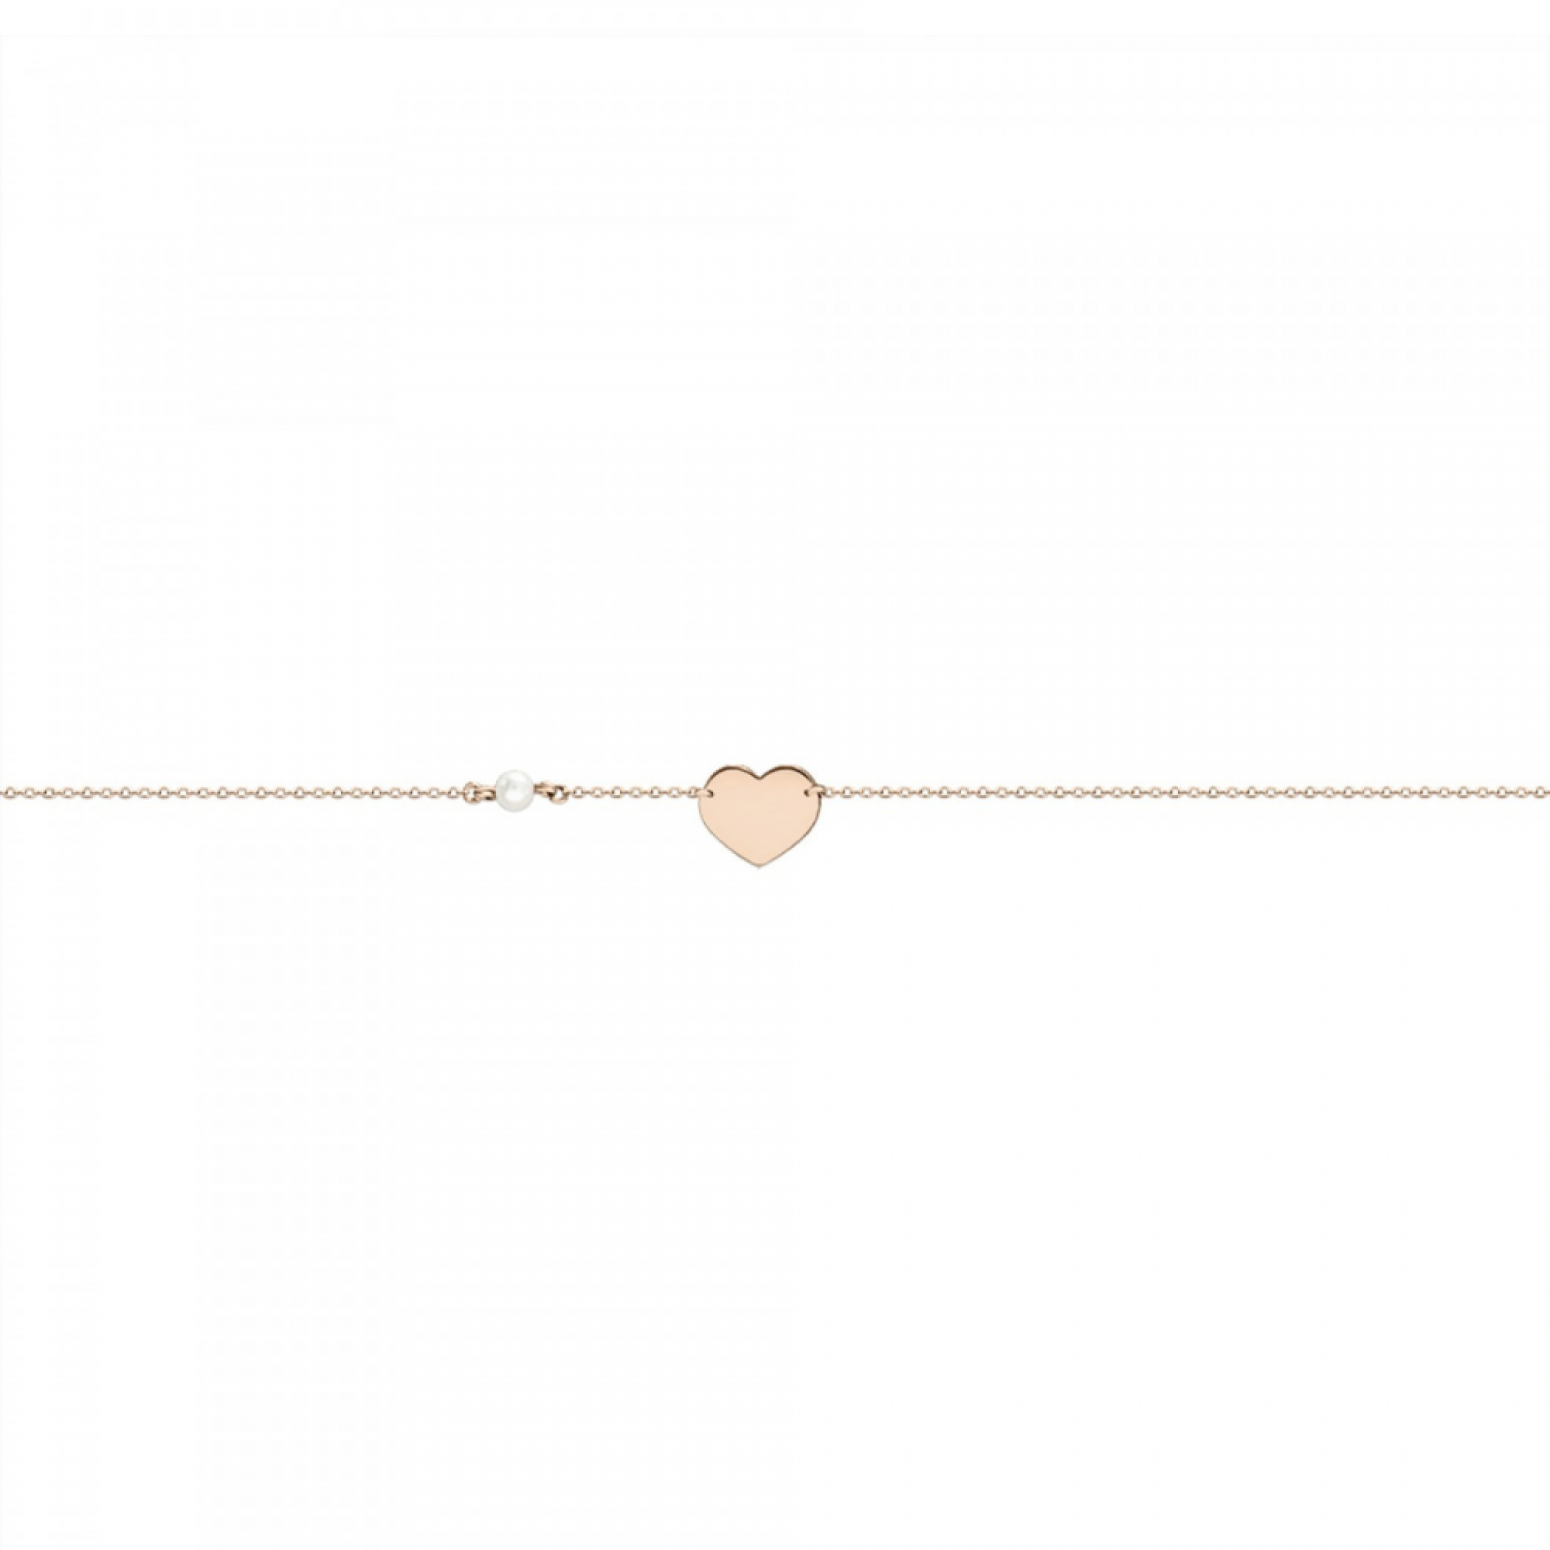 Heart bracelet, Κ14 pink gold with pearl, H br2231 BRACELETS Κοσμηματα - chrilia.gr